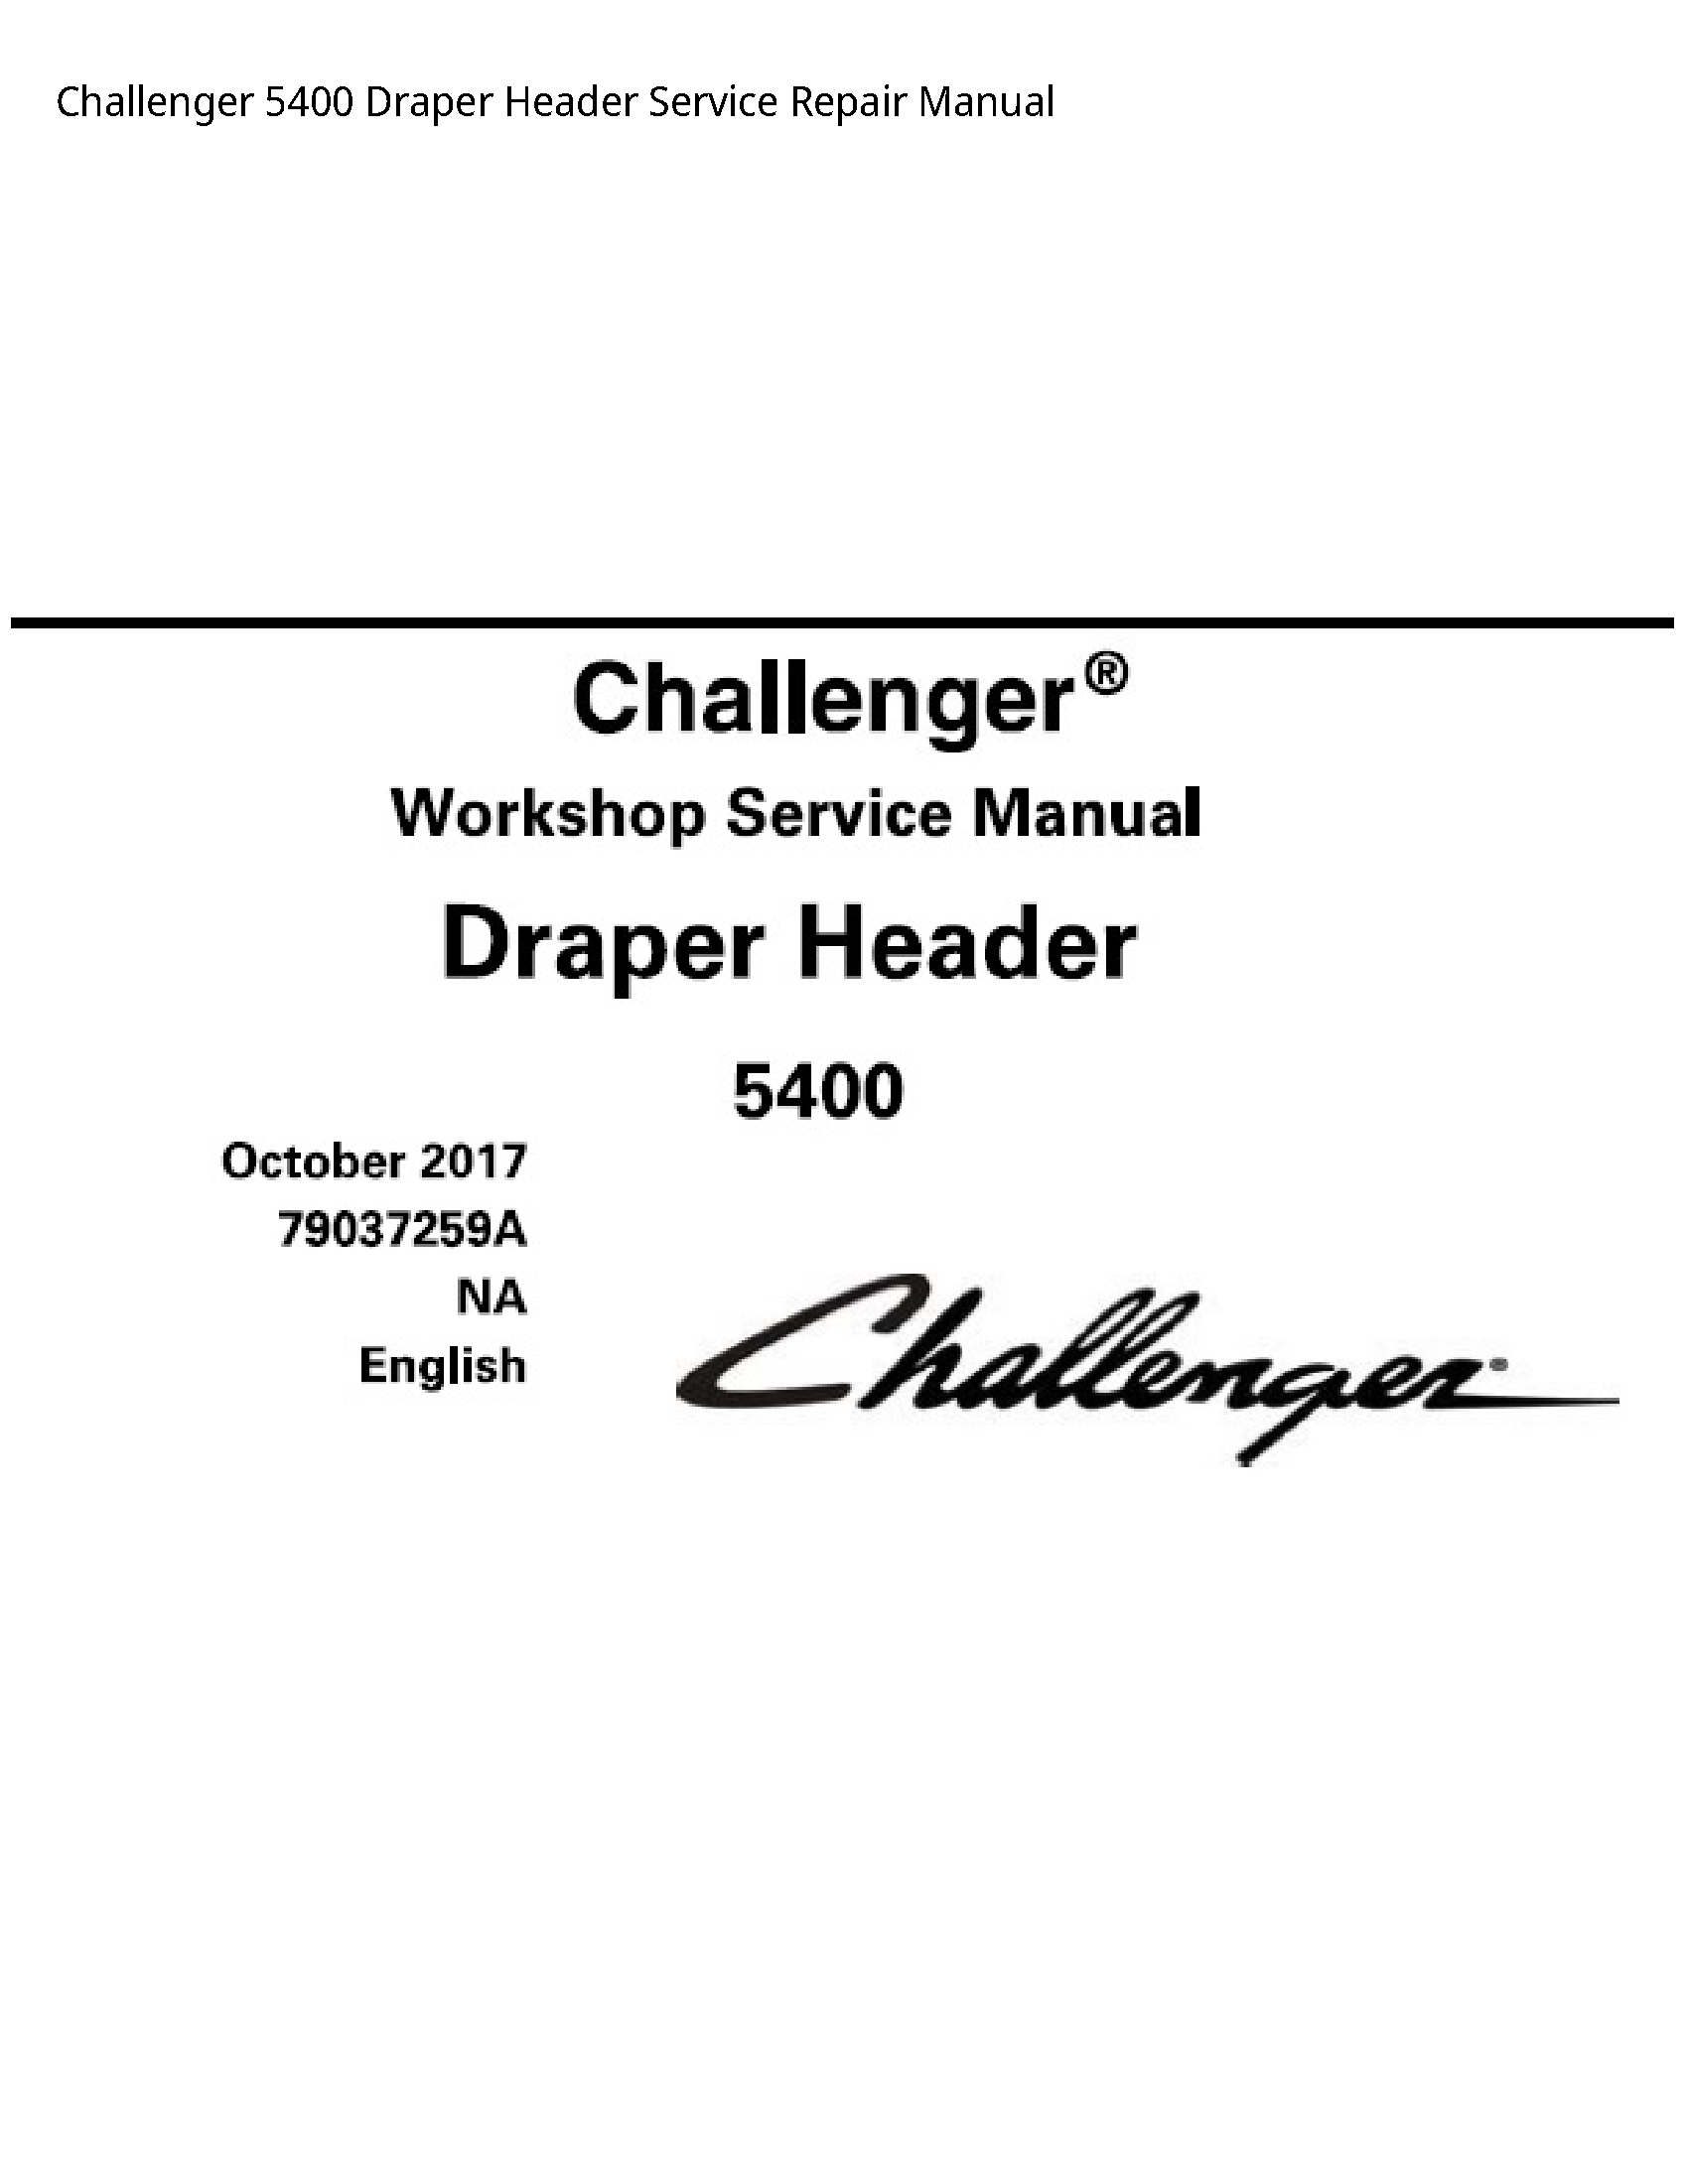 Challenger 5400 Draper Header manual